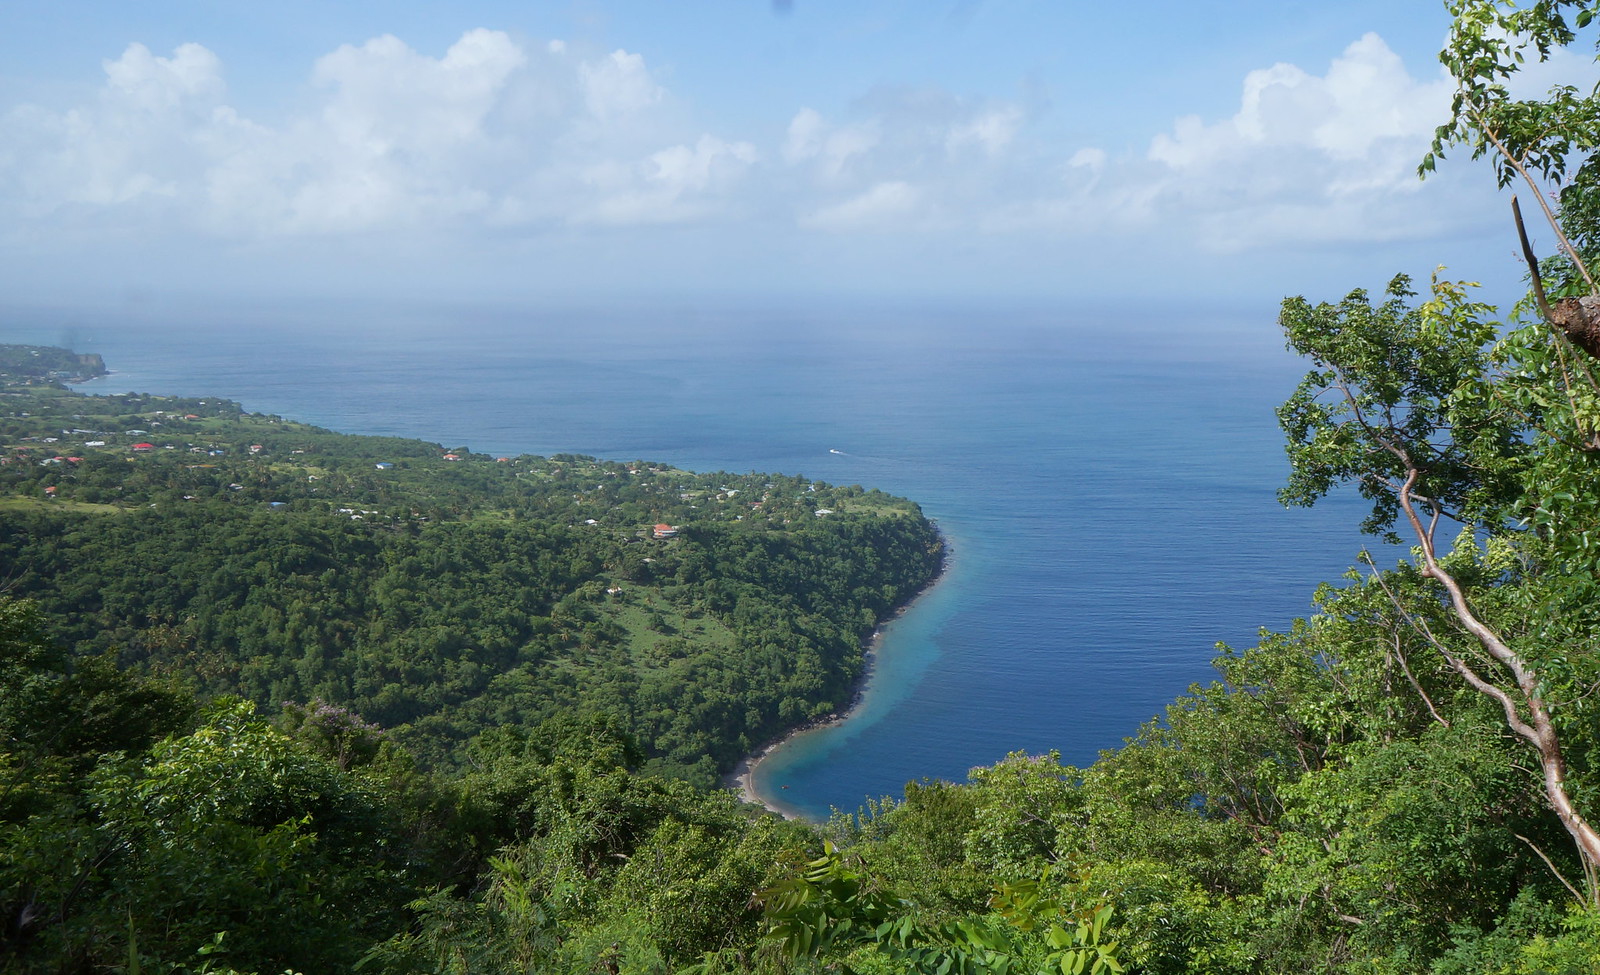 View of a tropical beach seen while hiking Gros Piton in Saint Lucia